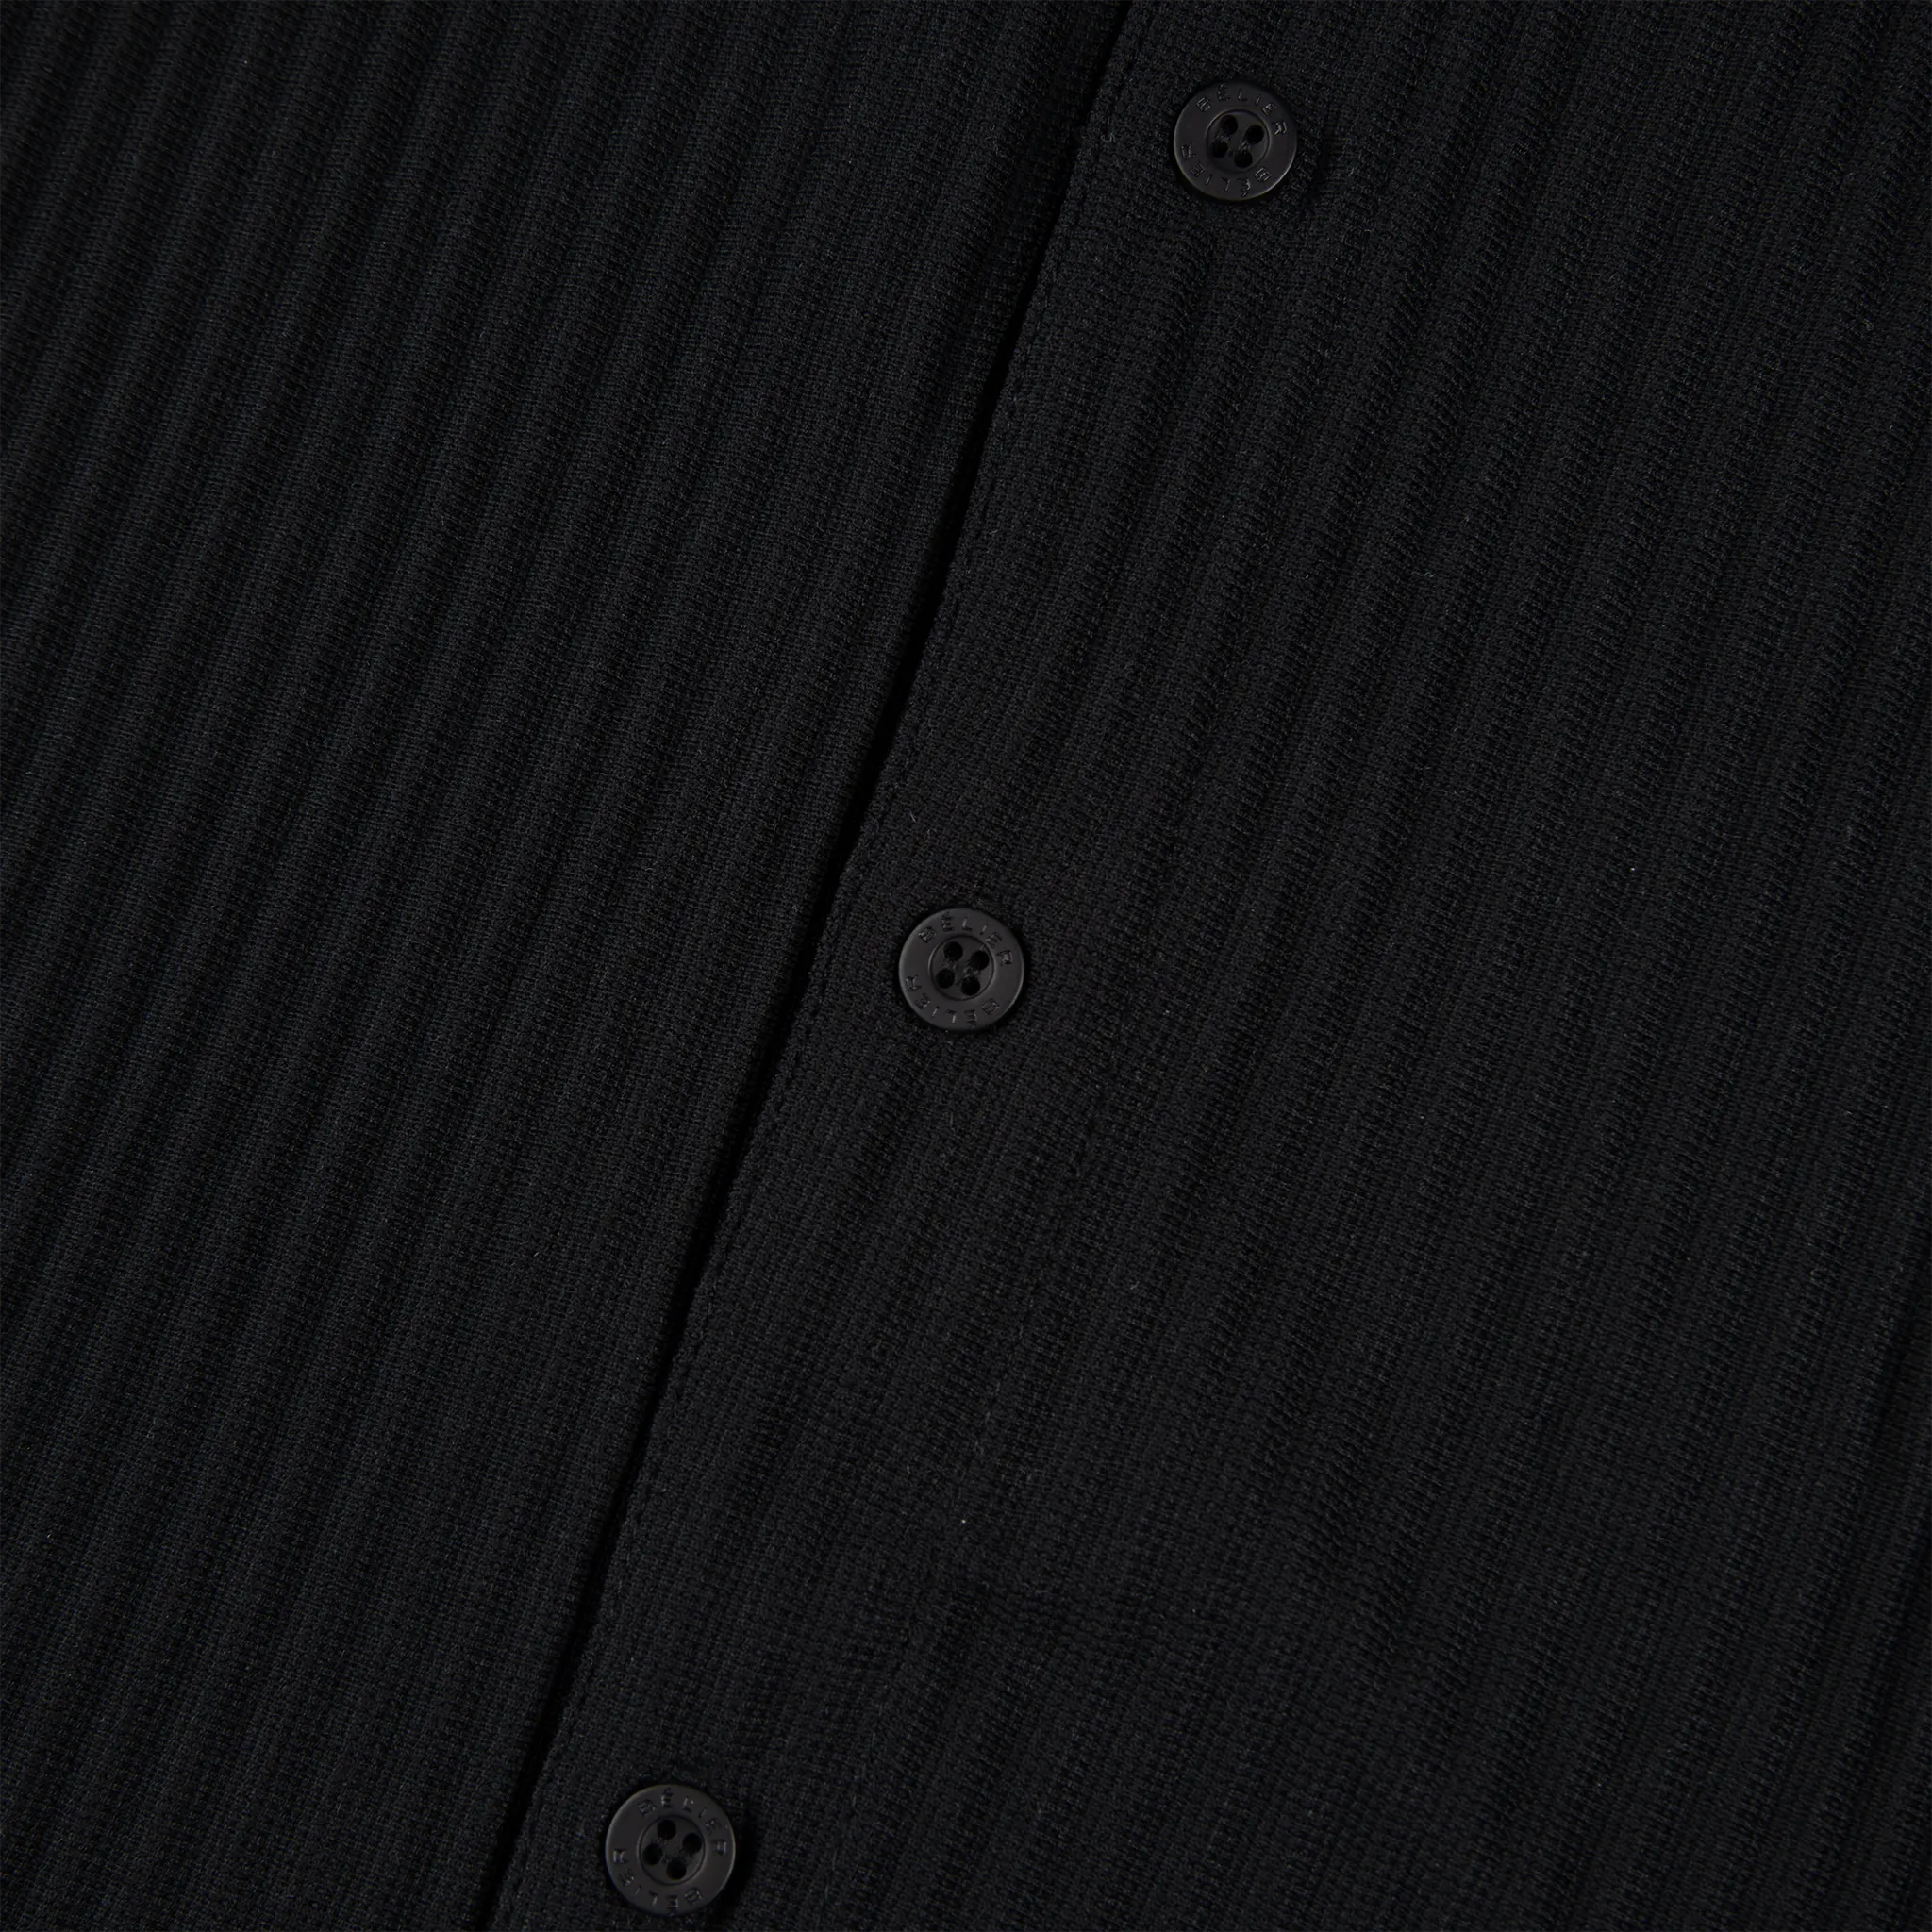 Detail view of Belier Pleated Short Sleeve Black Resort Shirt BM-073